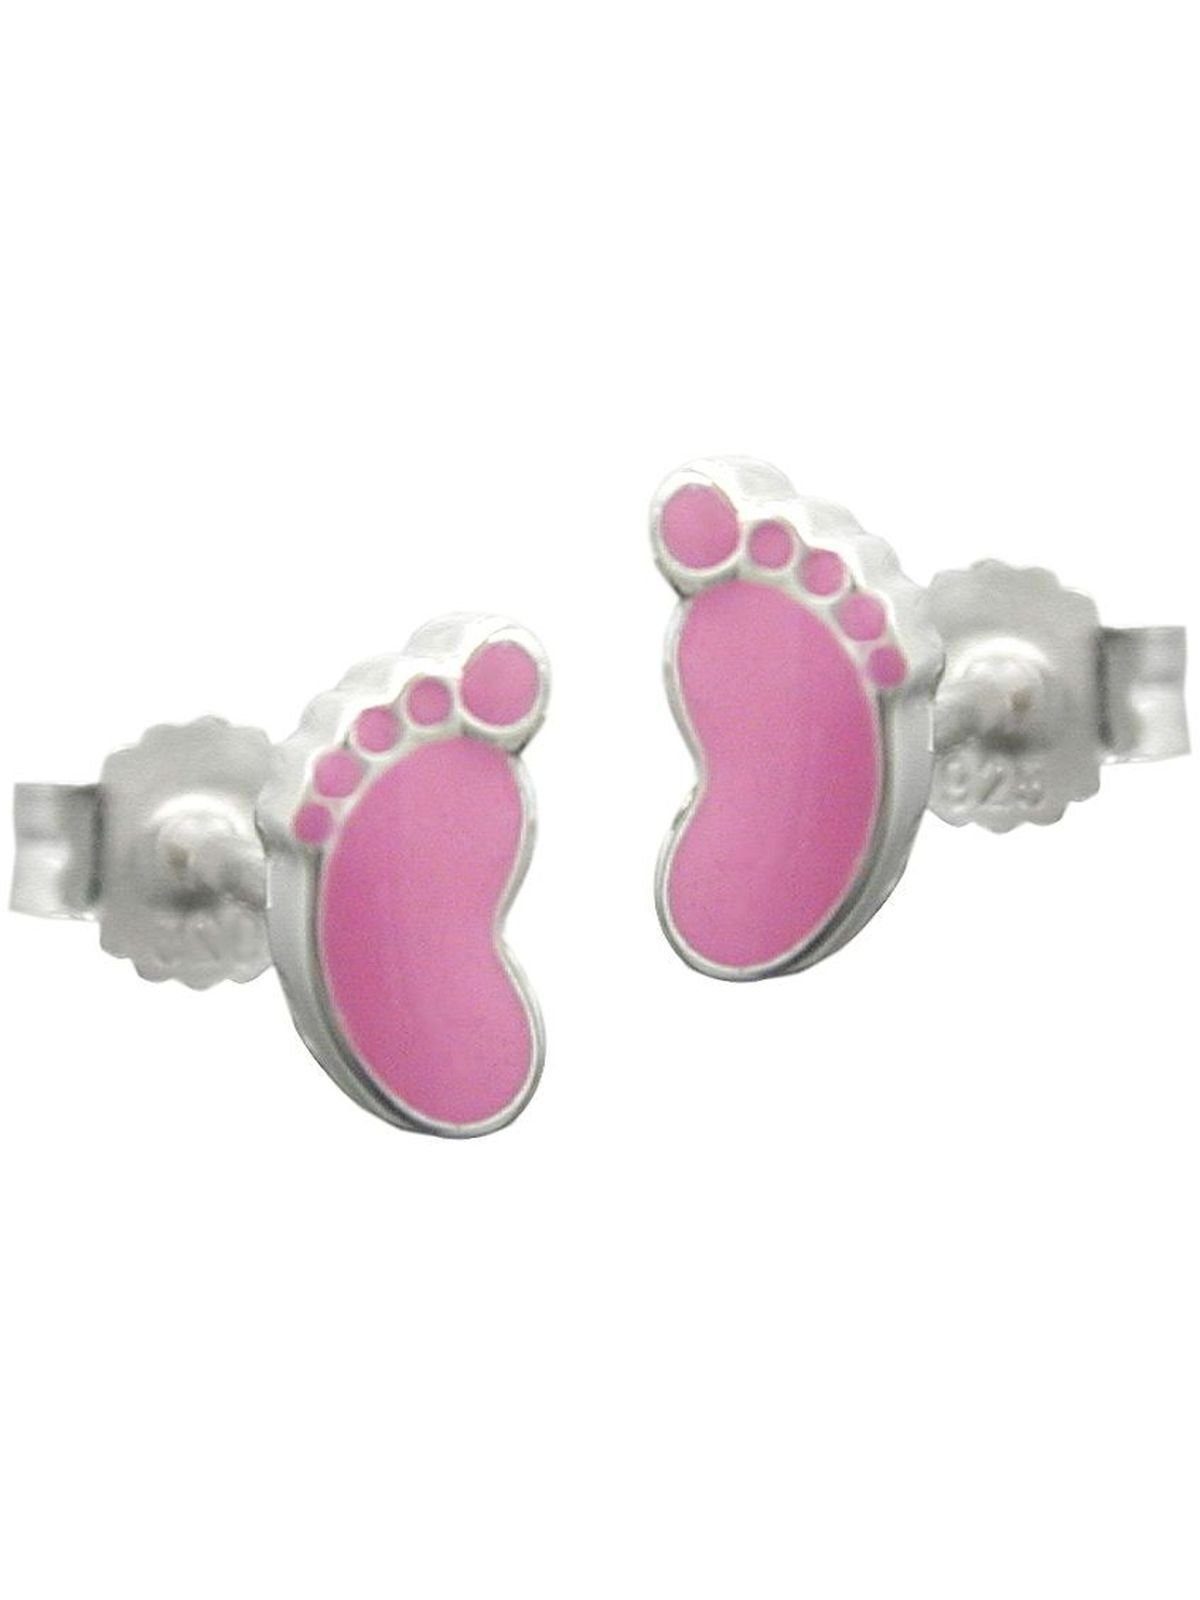 (1-tlg) 7x4mm Silber Paar rosa Gallay Ohrring Ohrstecker lackiert Fuß Kinderohrring 925